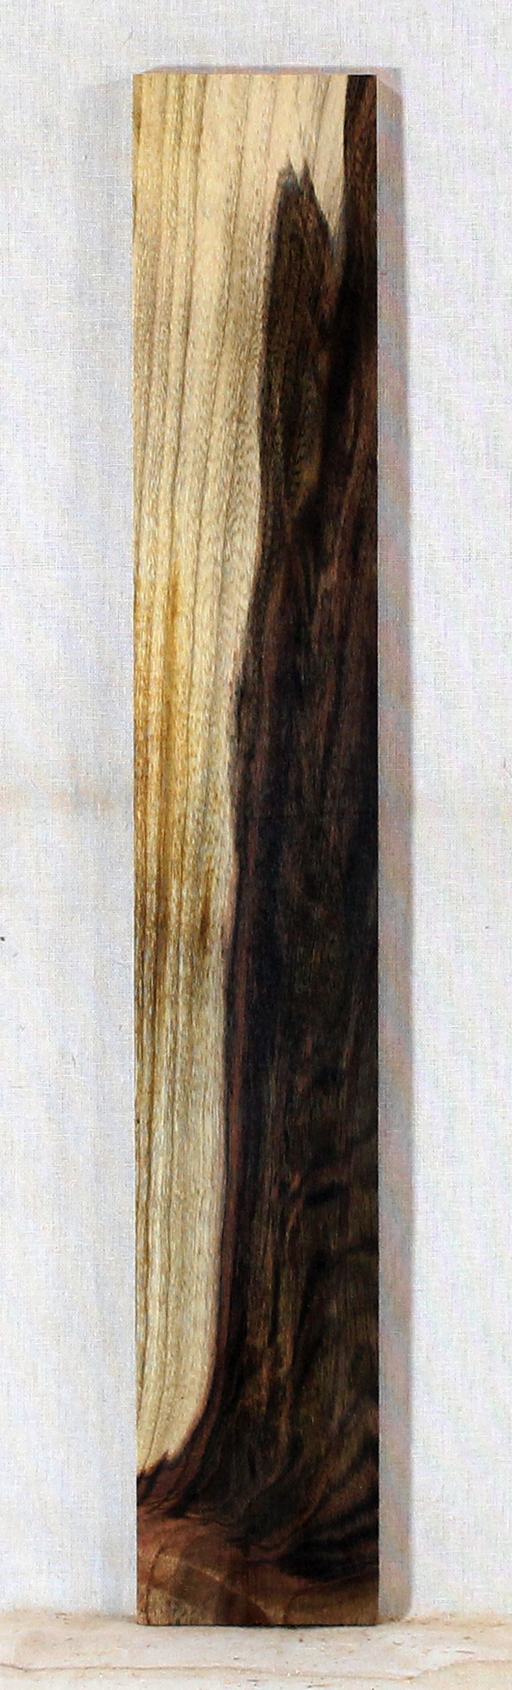 Pistachio Ukulele Fingerboard (EF96)